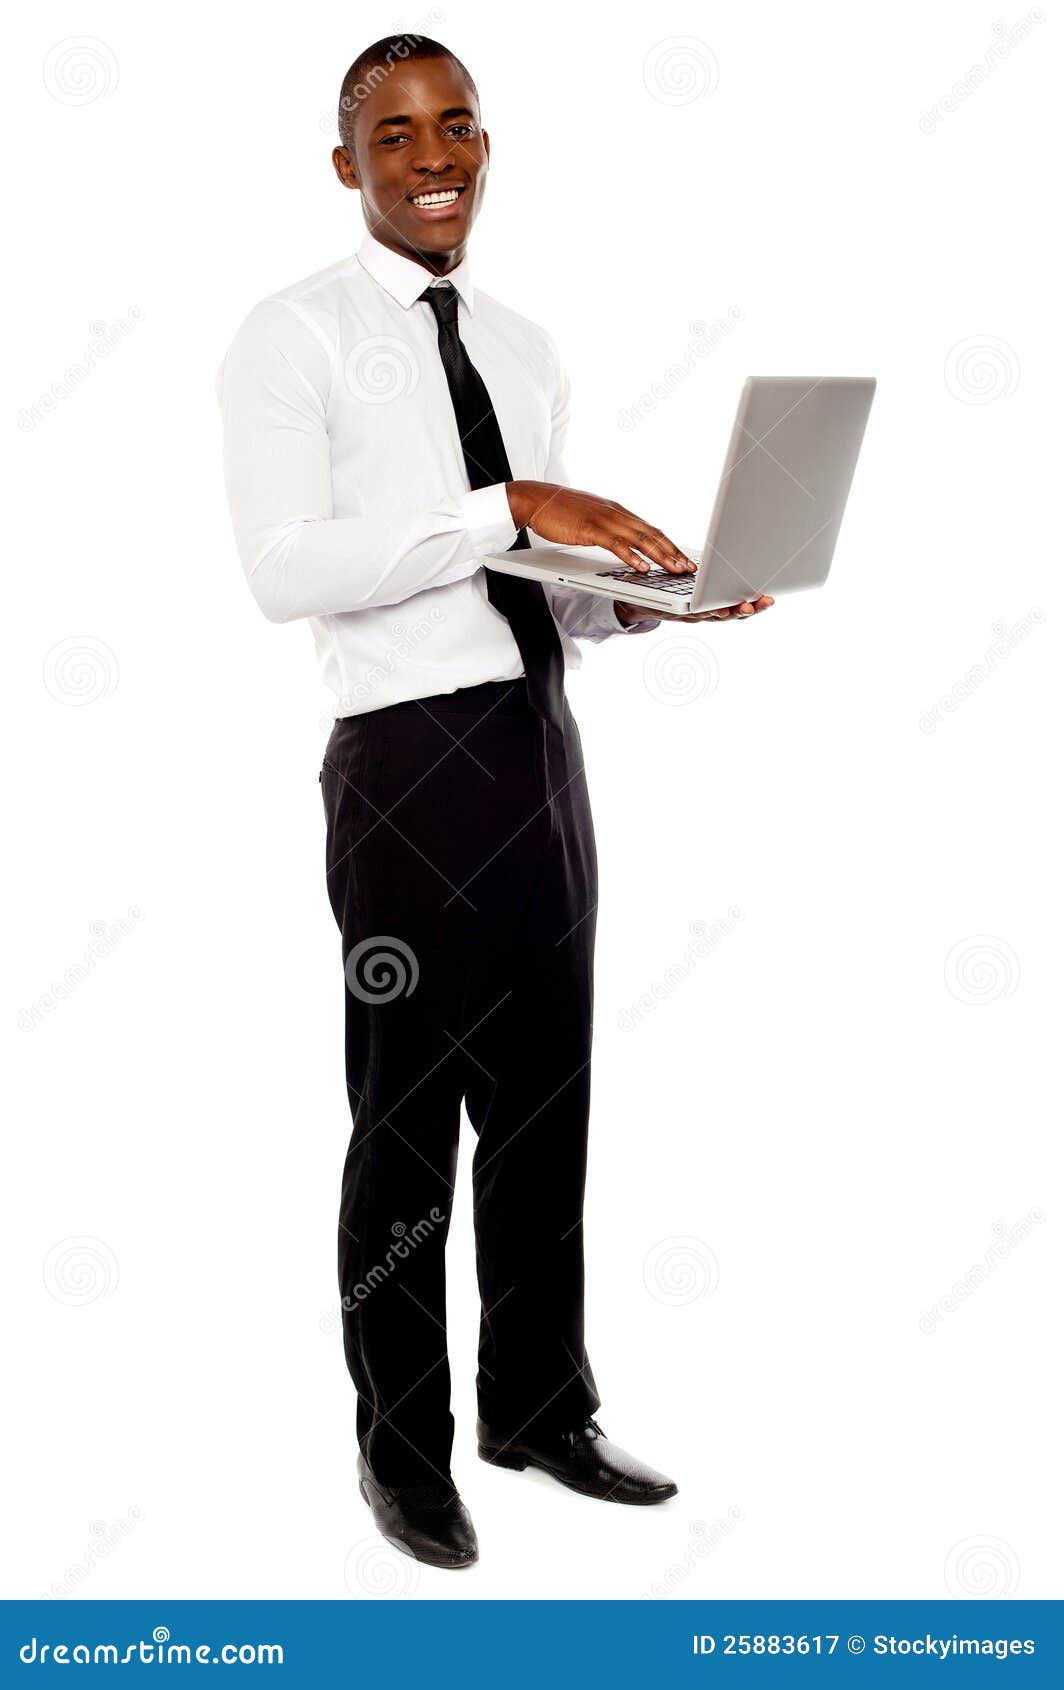 portrait of businessperson holding laptop